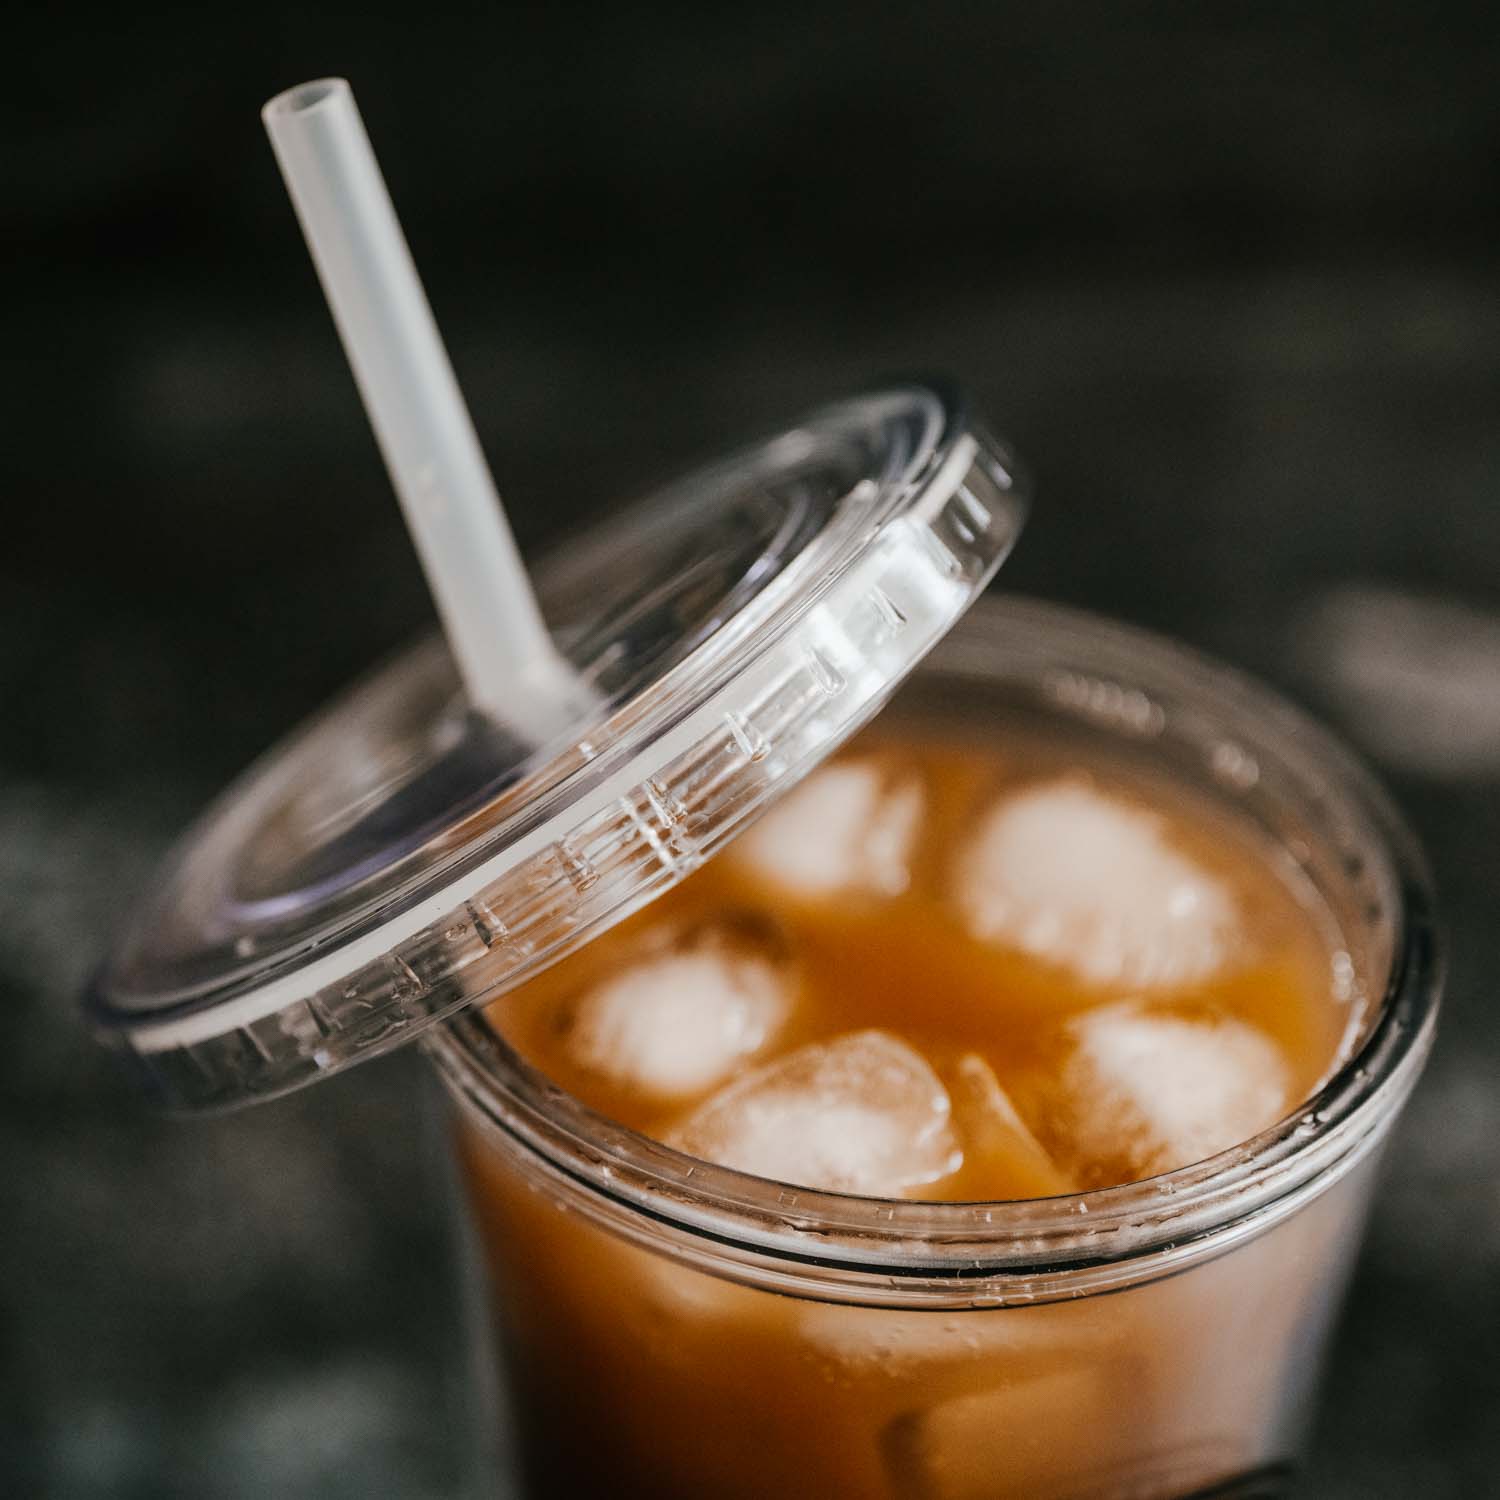 Classic Iced Coffee Tumbler – Death Wish Coffee Company